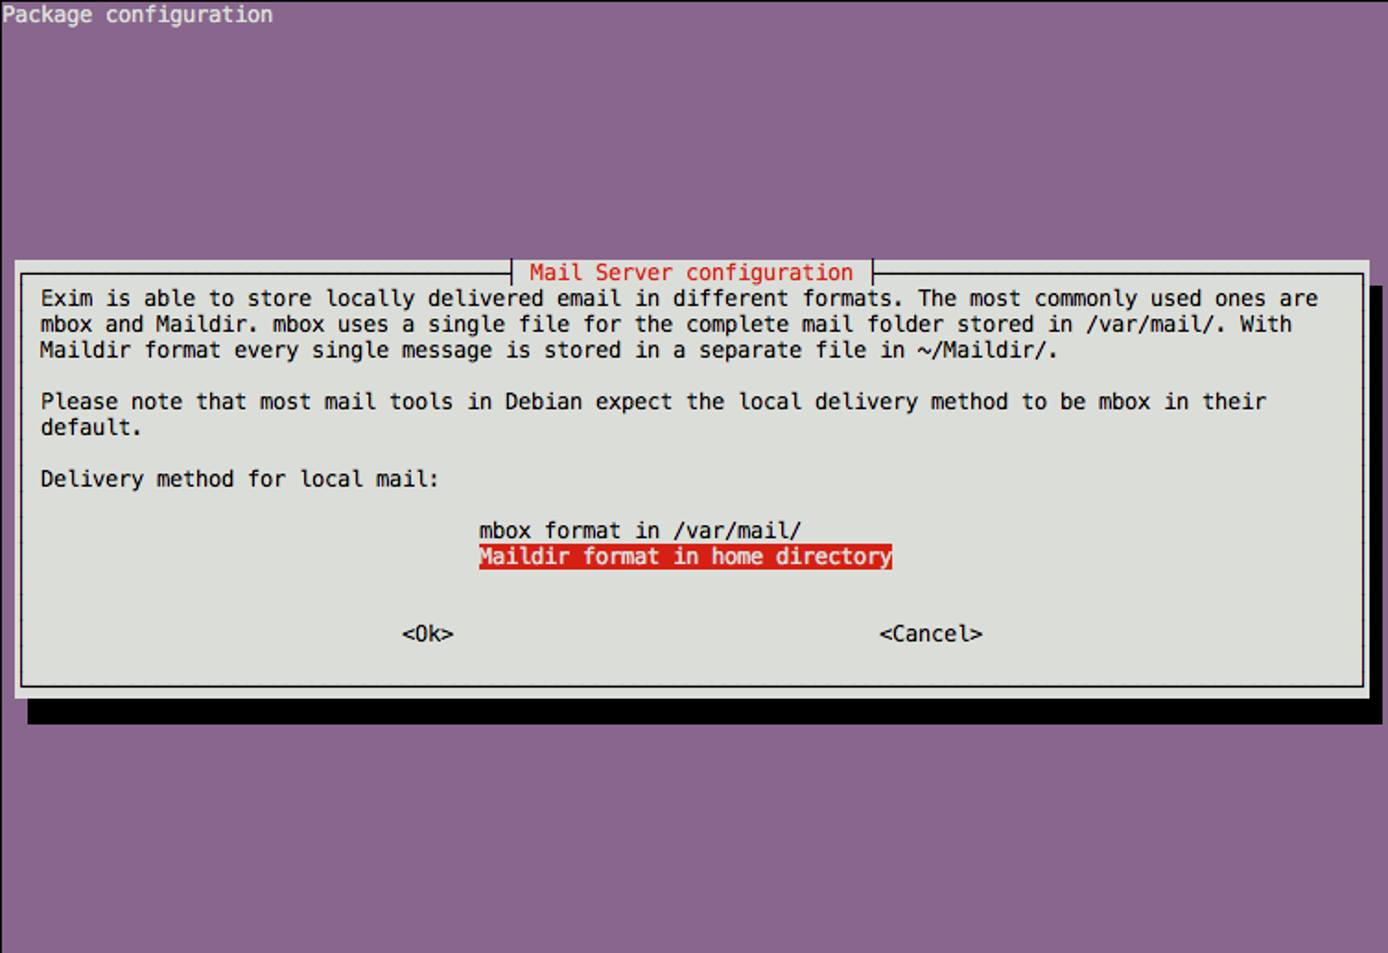 Exim4 mail format configuration on Ubuntu 12.04 LTS (Precise).